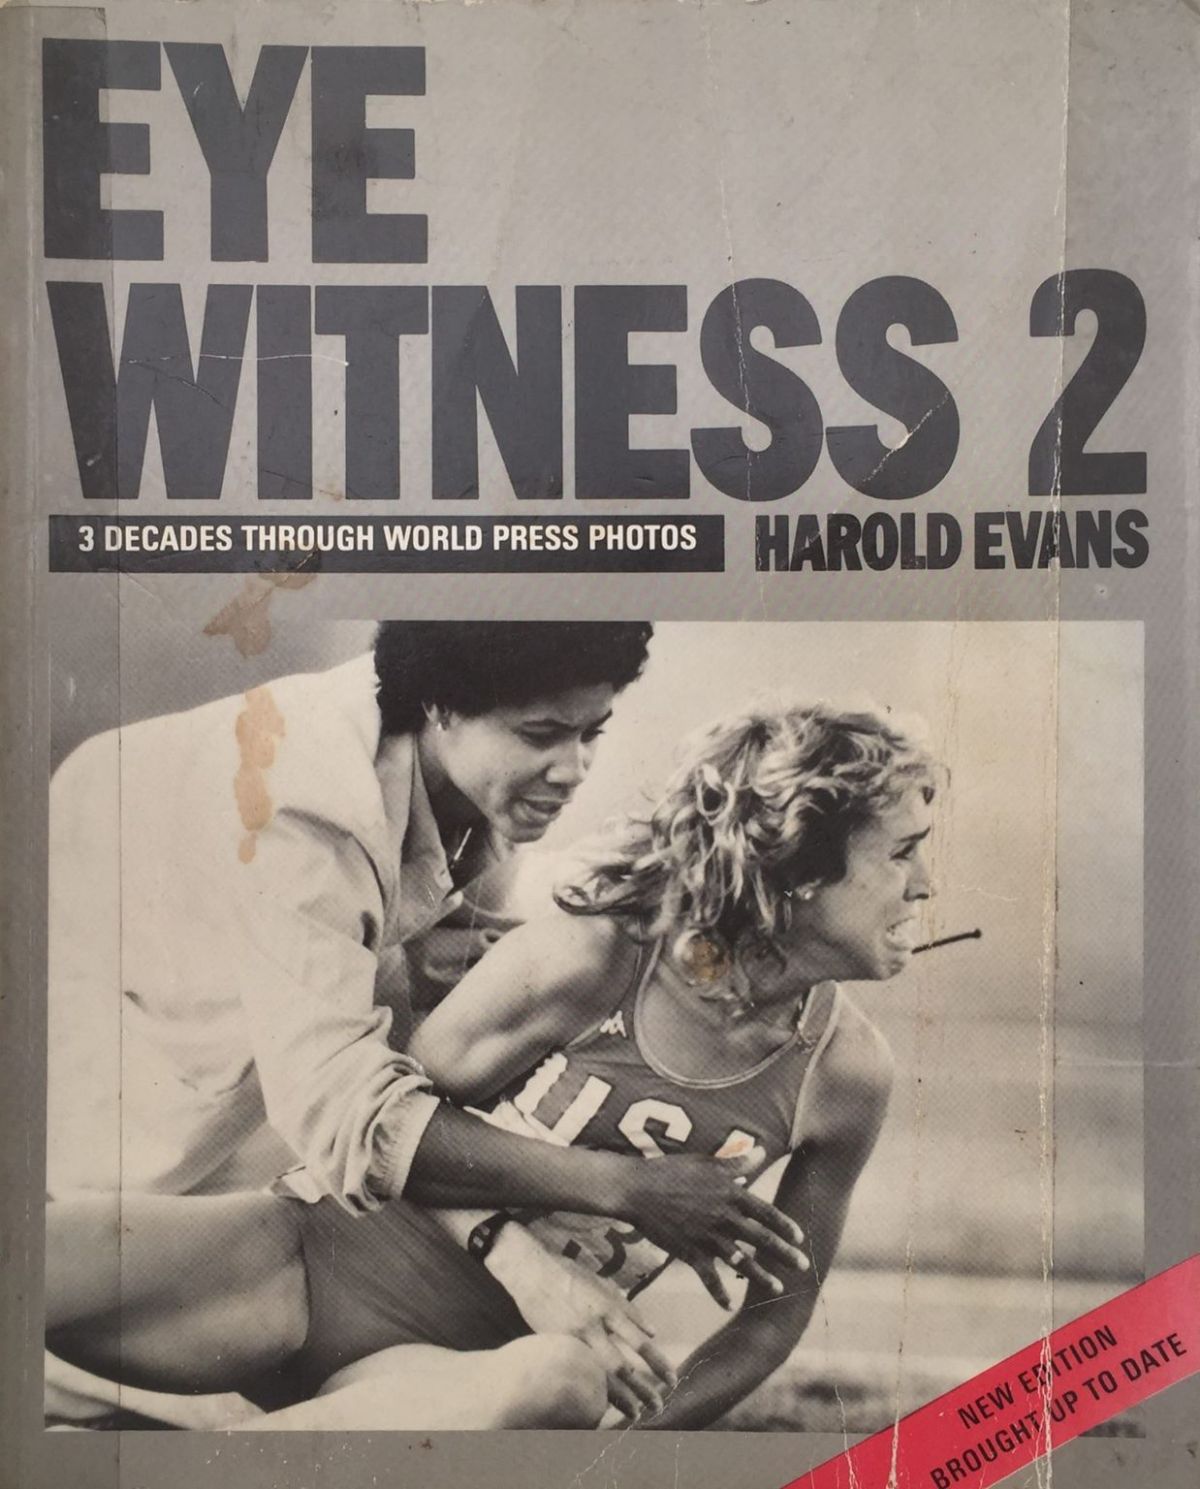 EYEWITNESS 2: Three Decades Through World Press Photos